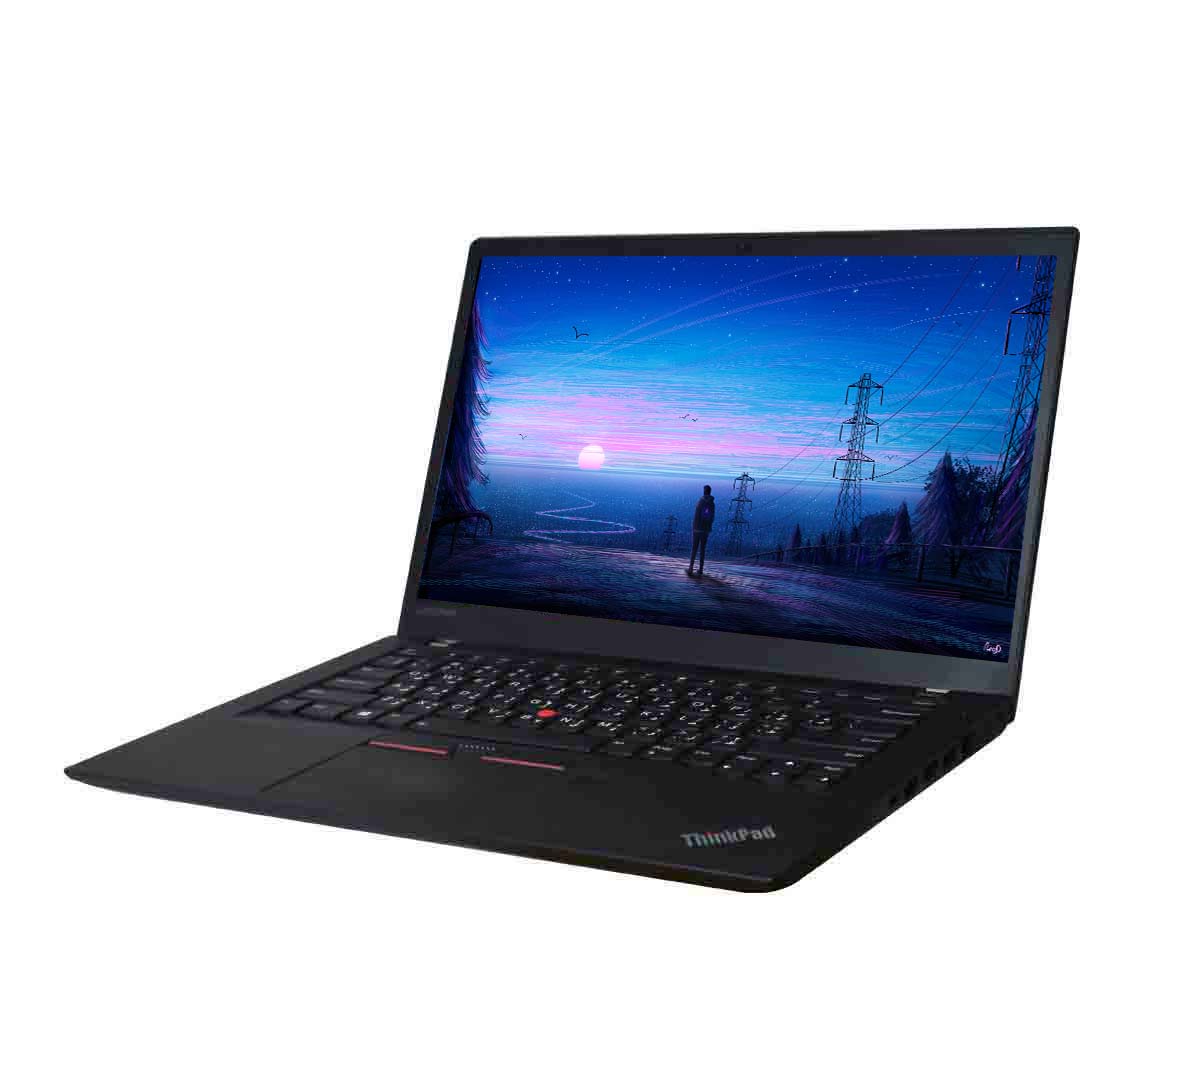 Lenovo ThinkPad T470 Business Laptop, Intel Core i7-6th Gen CPU, 16GB RAM, 256GB SSD, 14 inch Display, Windows 10 Pro